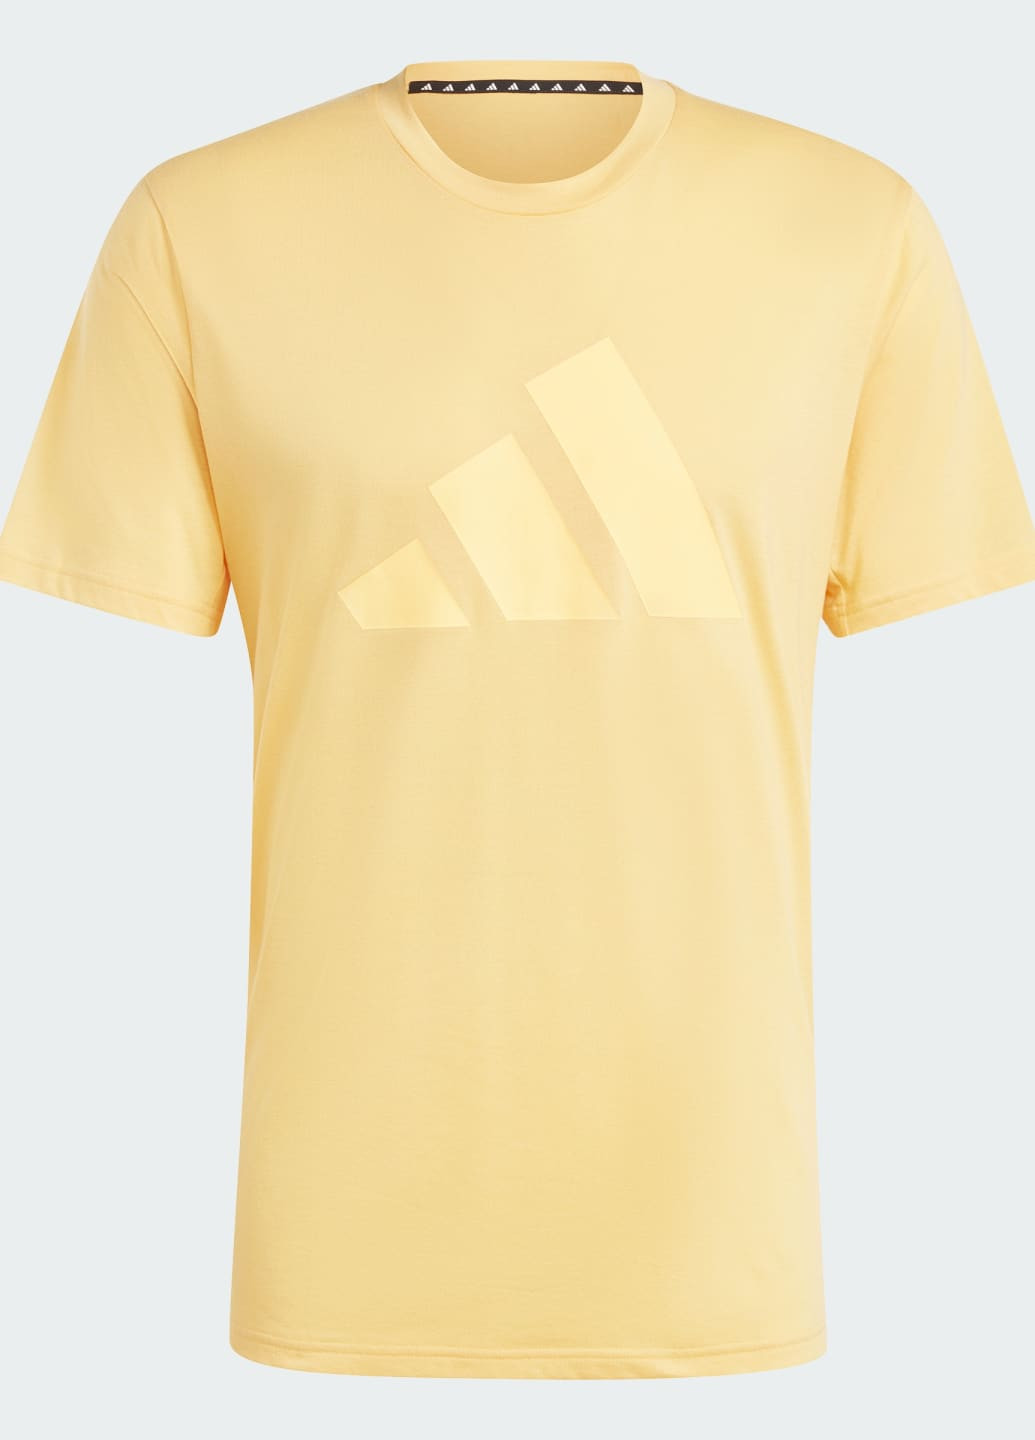 Оранжевая футболка для тренировок train essentials feelready logo adidas